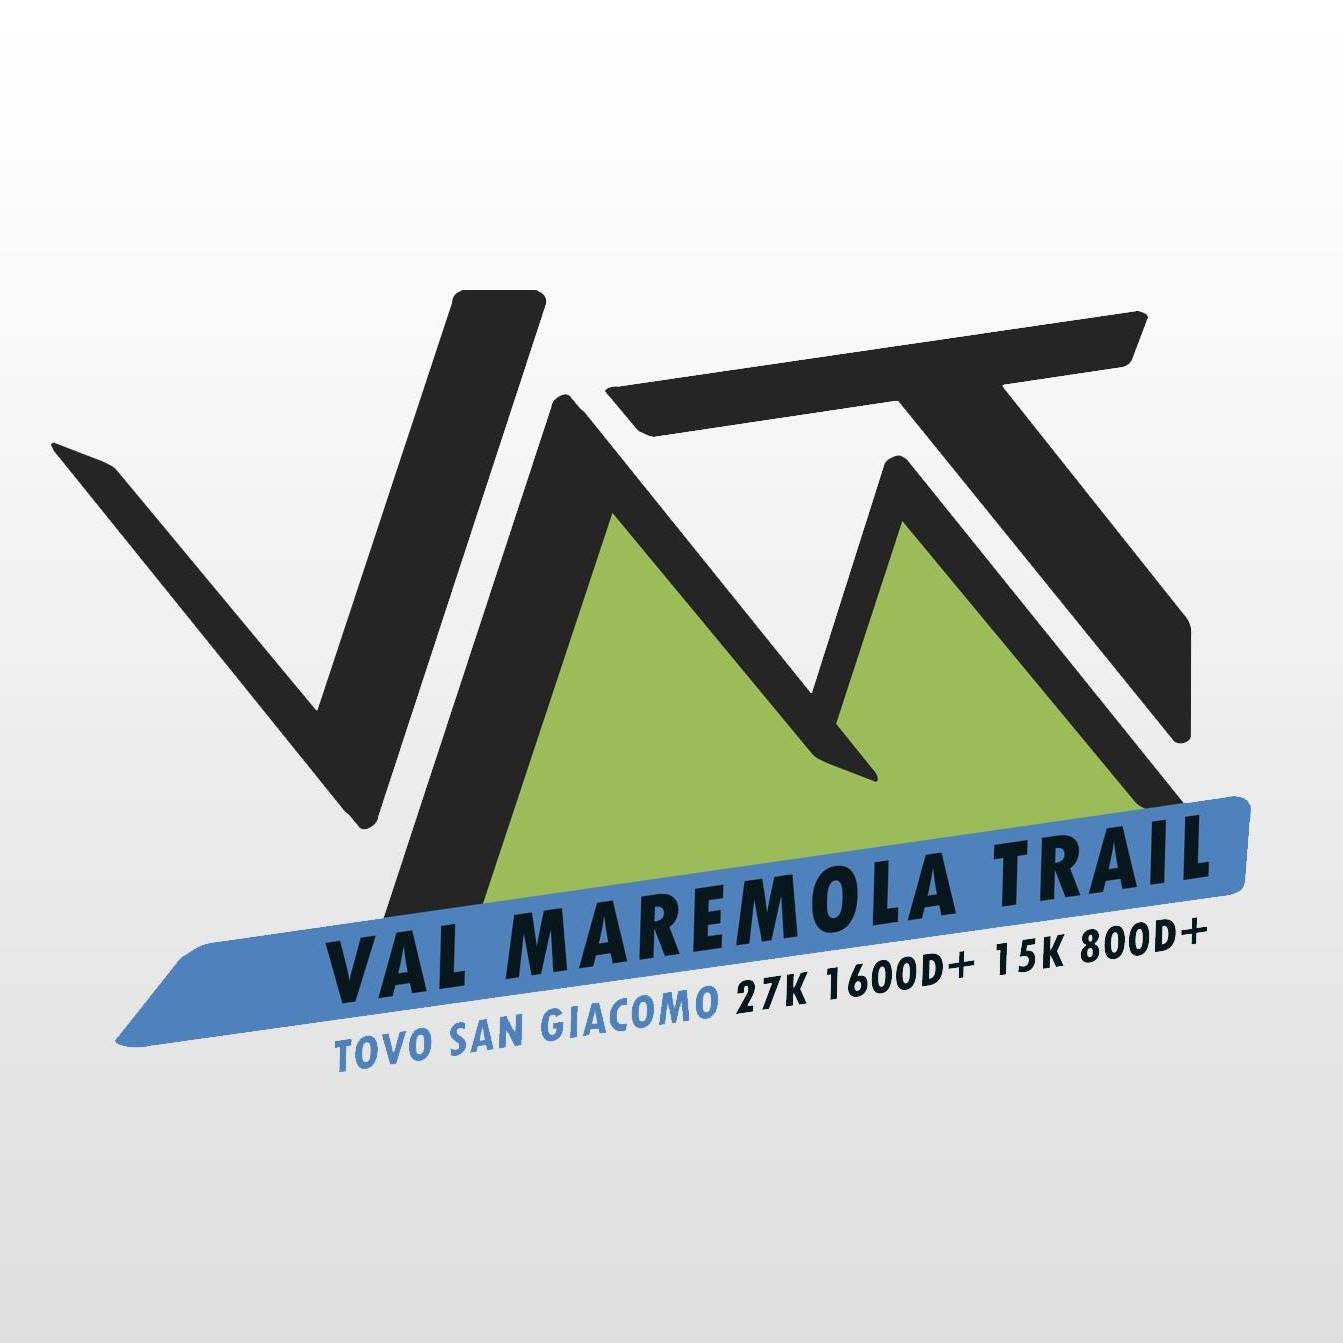 VAL MAREMOLA TRAIL